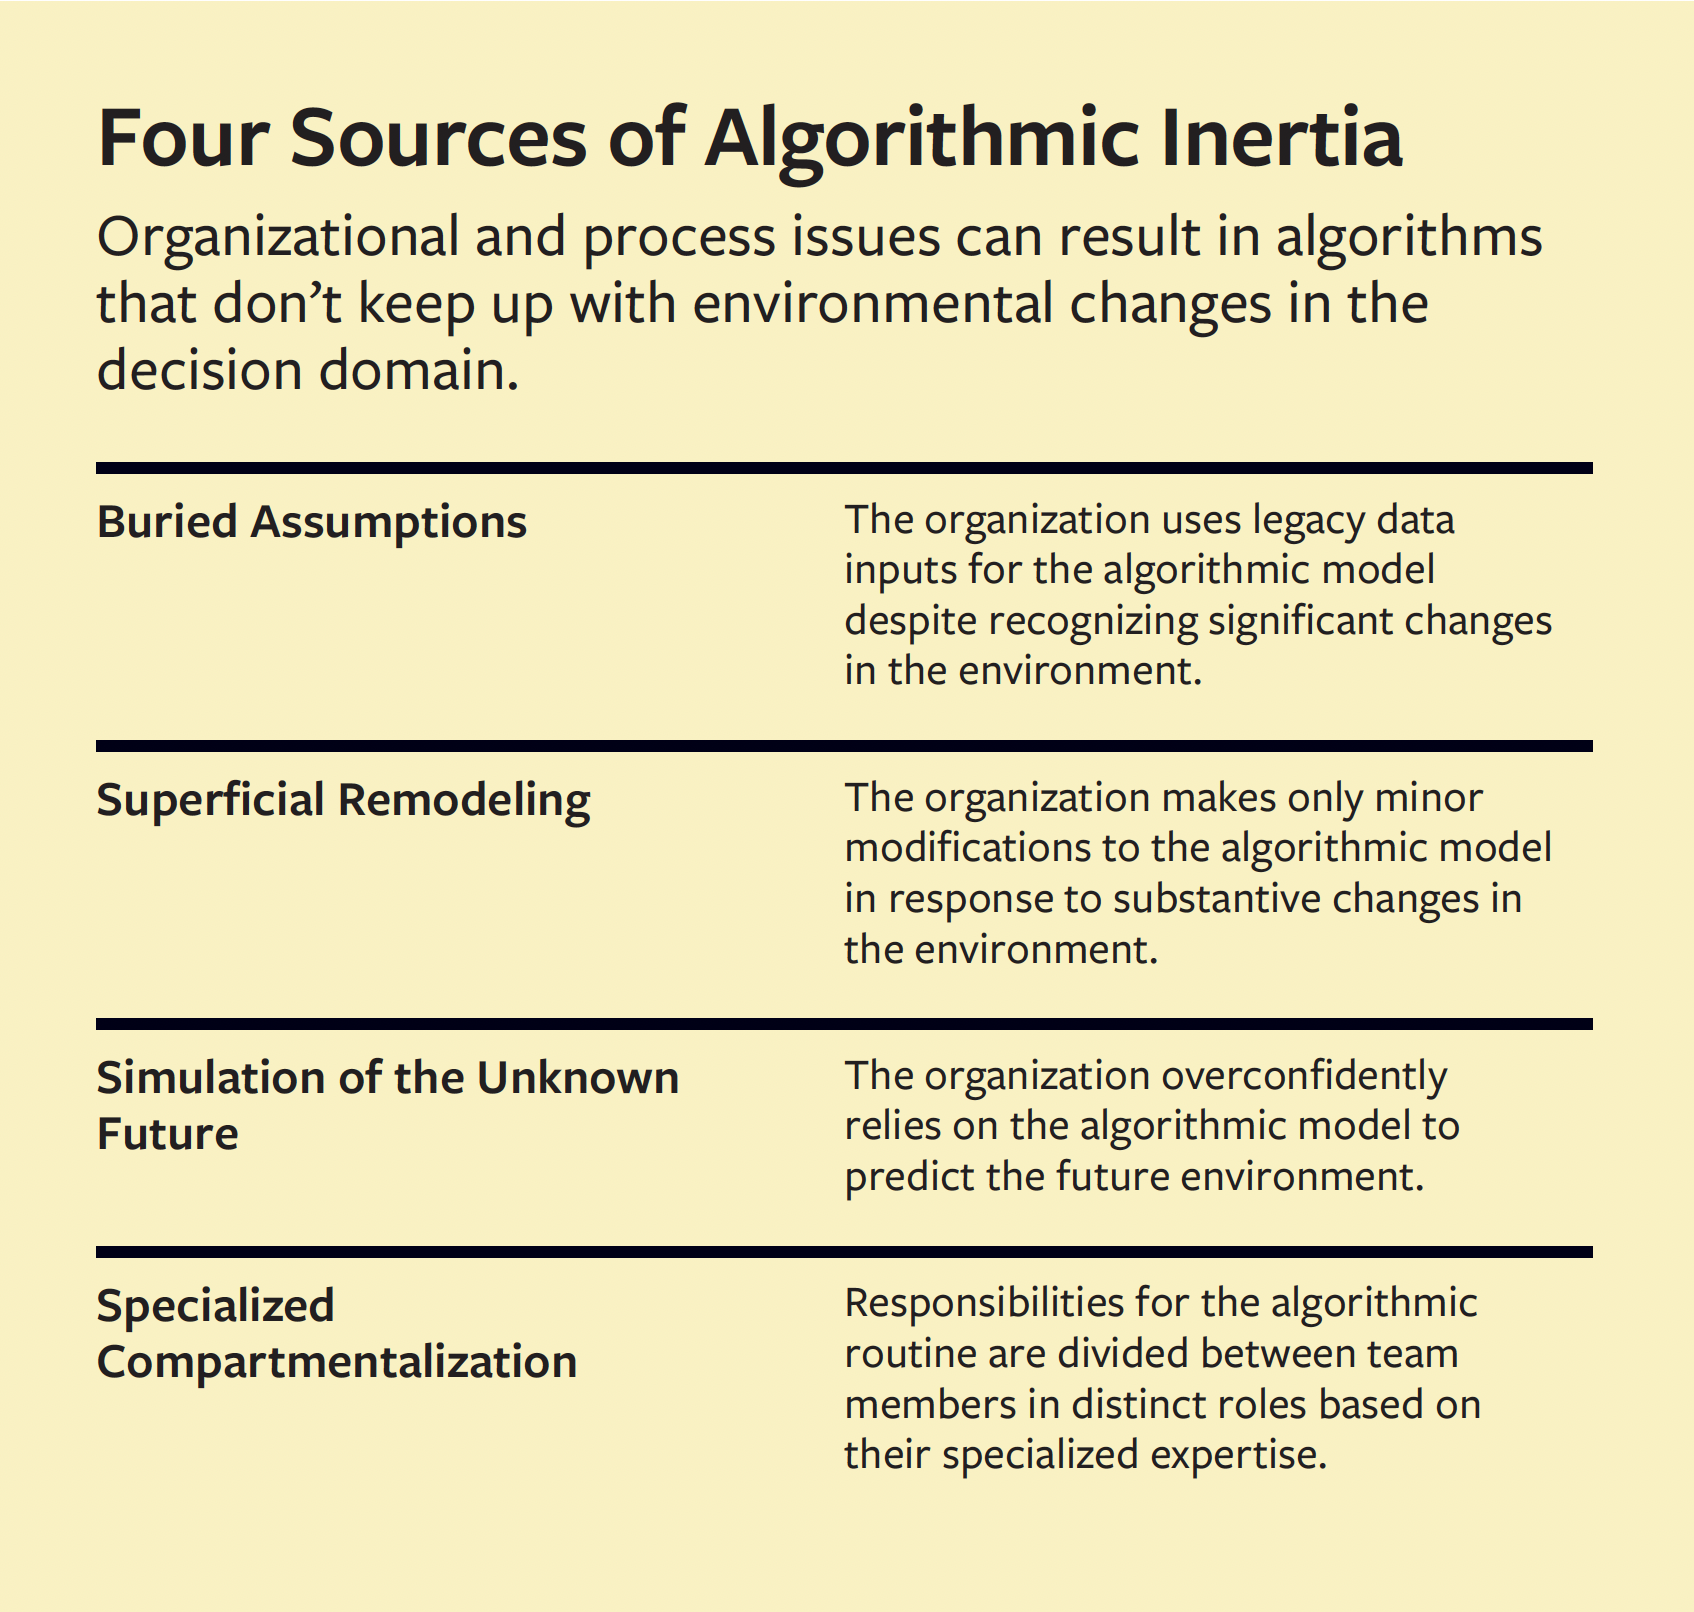 Four Sources of Algorithmic Inertia